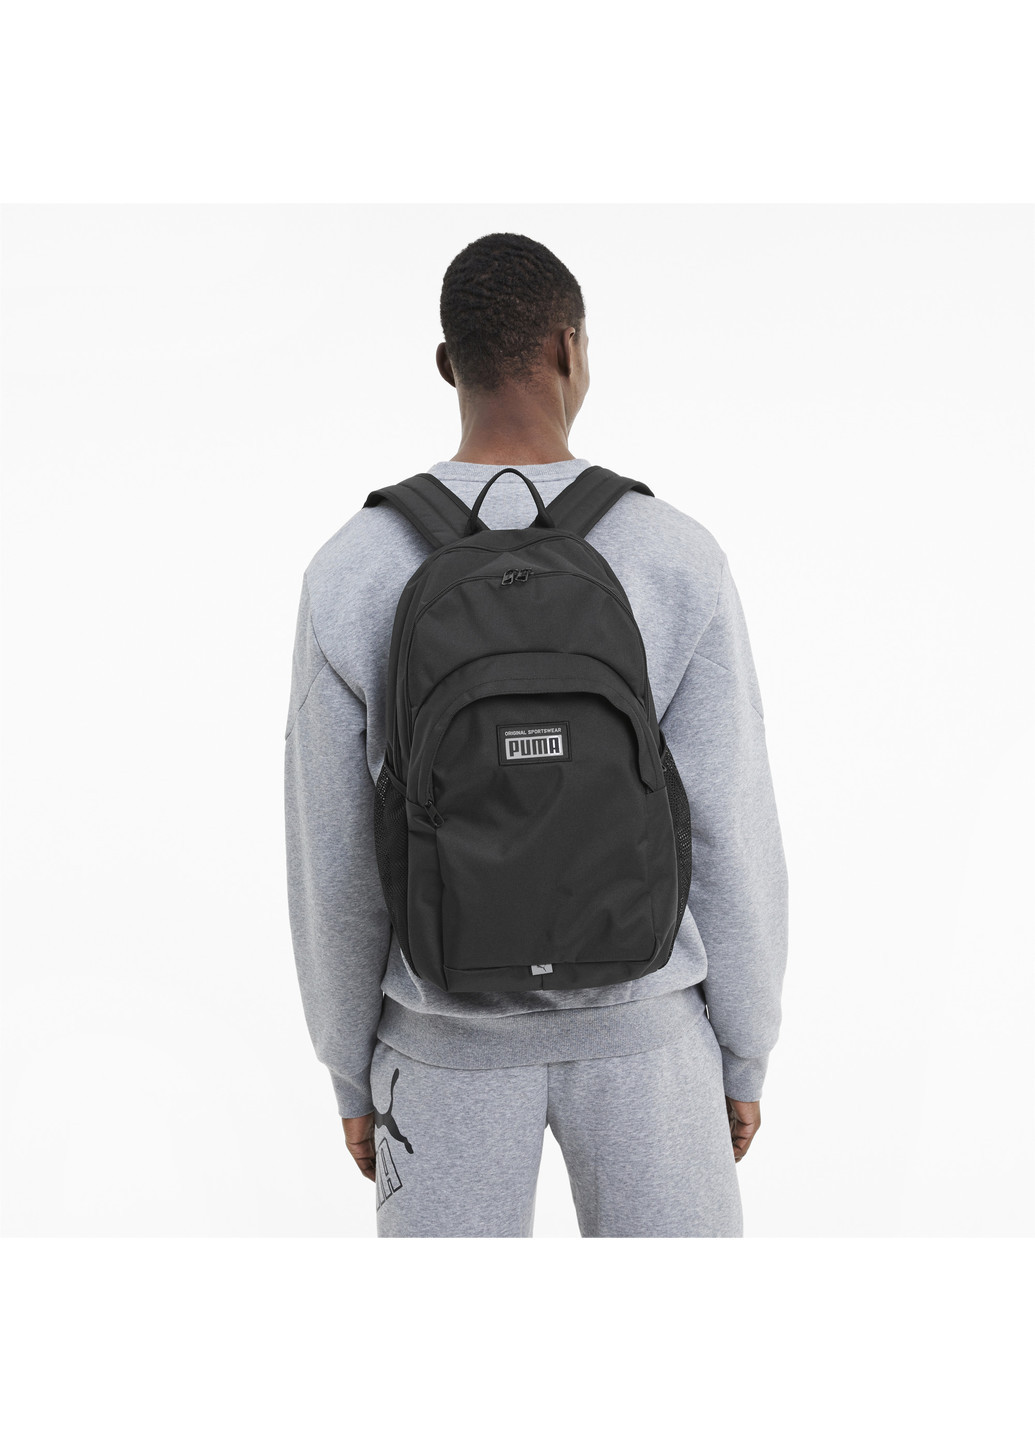 Рюкзак Academy Backpack Puma однотонний чорний спортивний